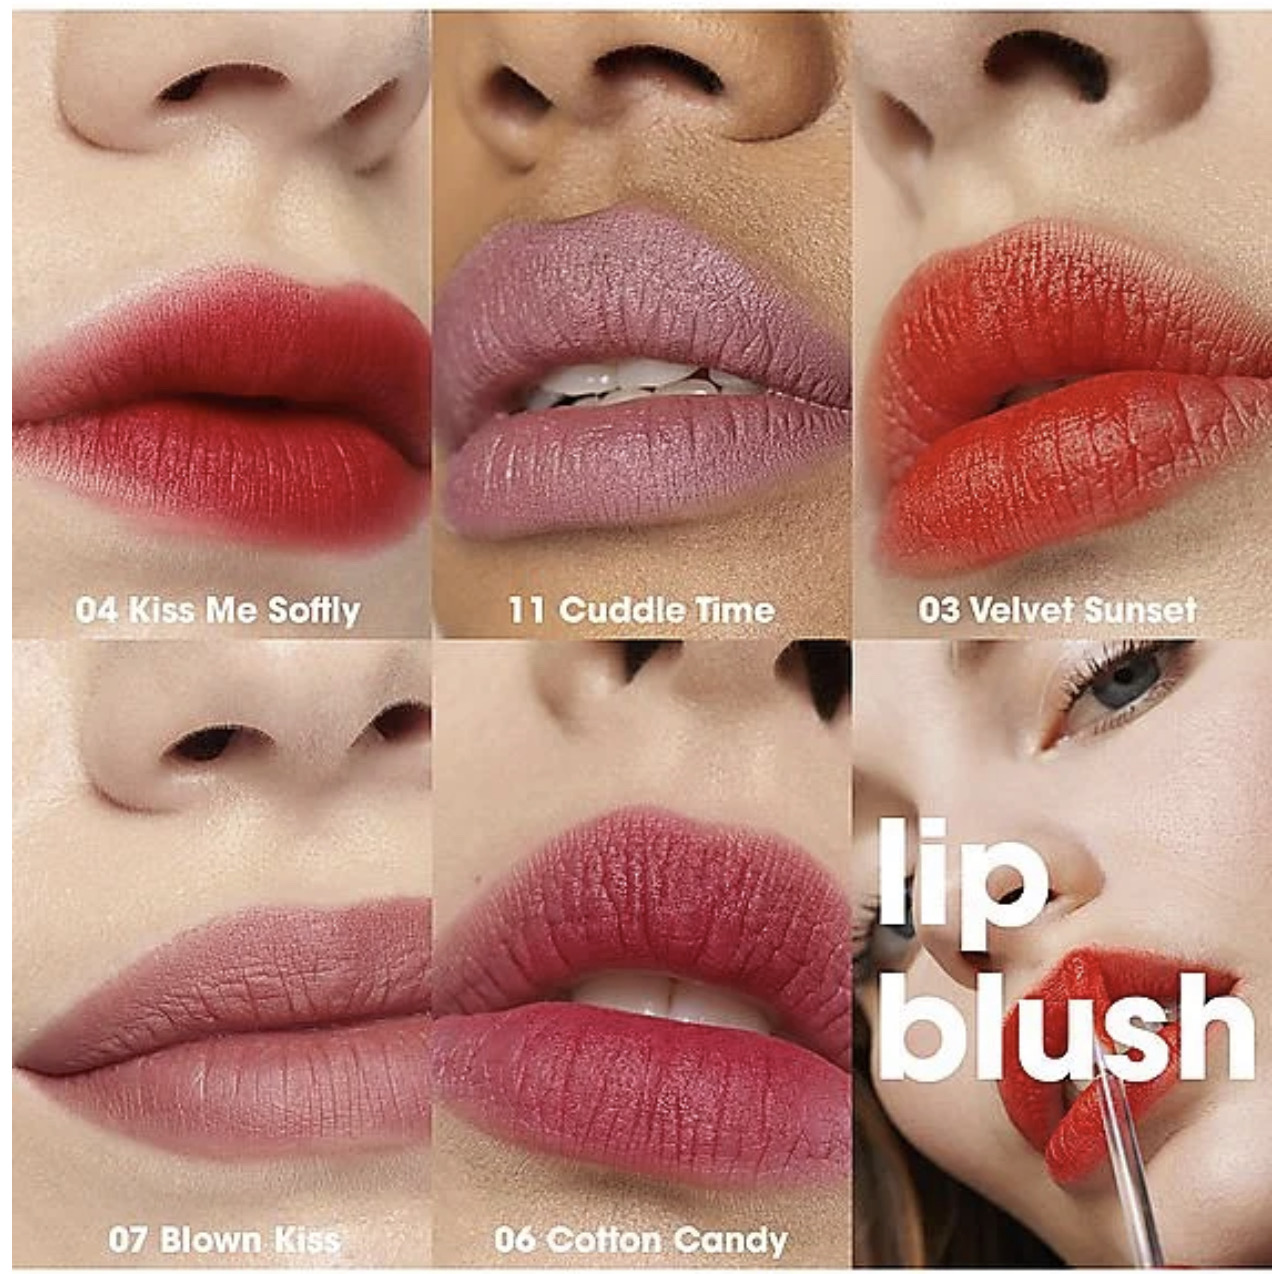 Sephora - Lip Blush Blotted Matte Lipstick | 11 Cuddle Time